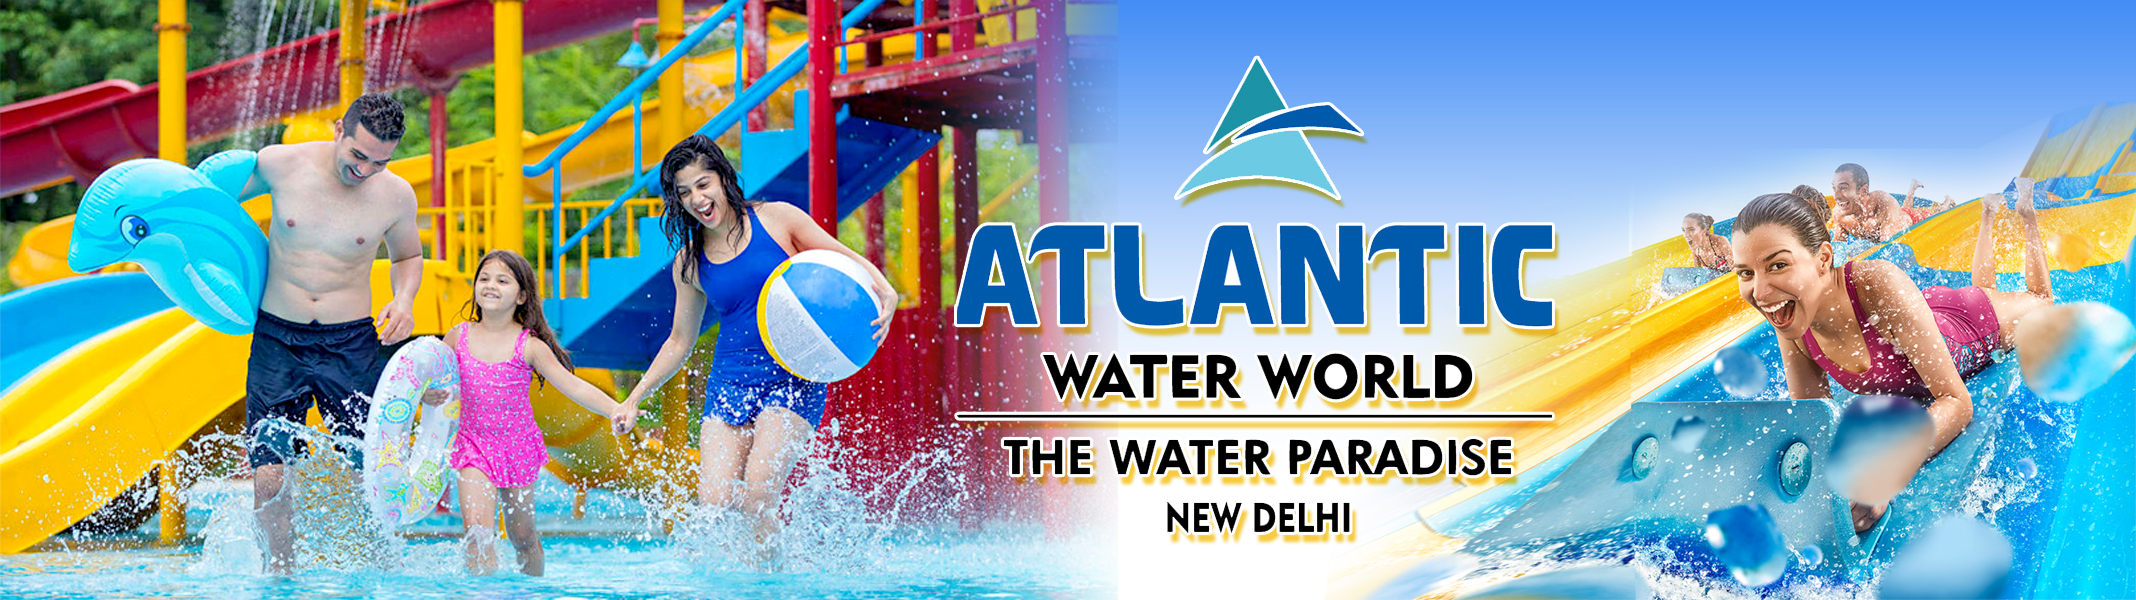 Atlantic Water World - Banner Promotional